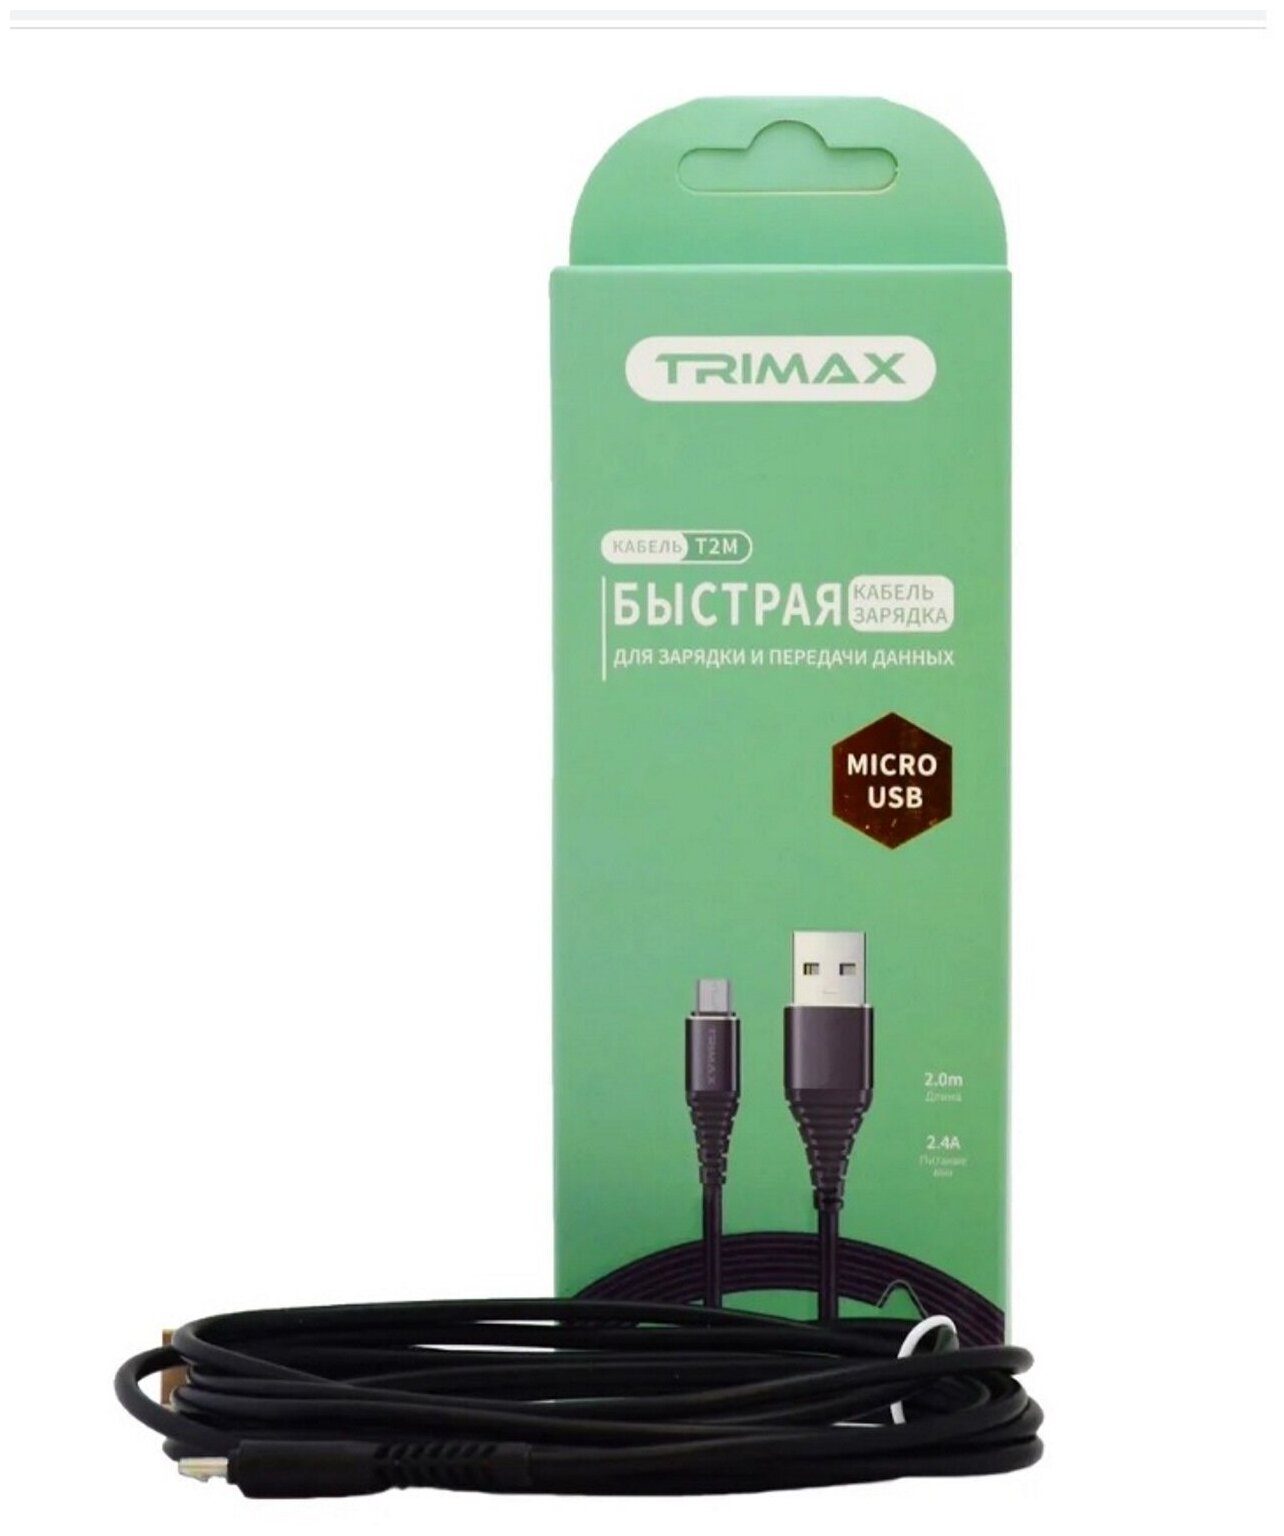 USB Кабель Trimax Micro-USB T2M 2m черный